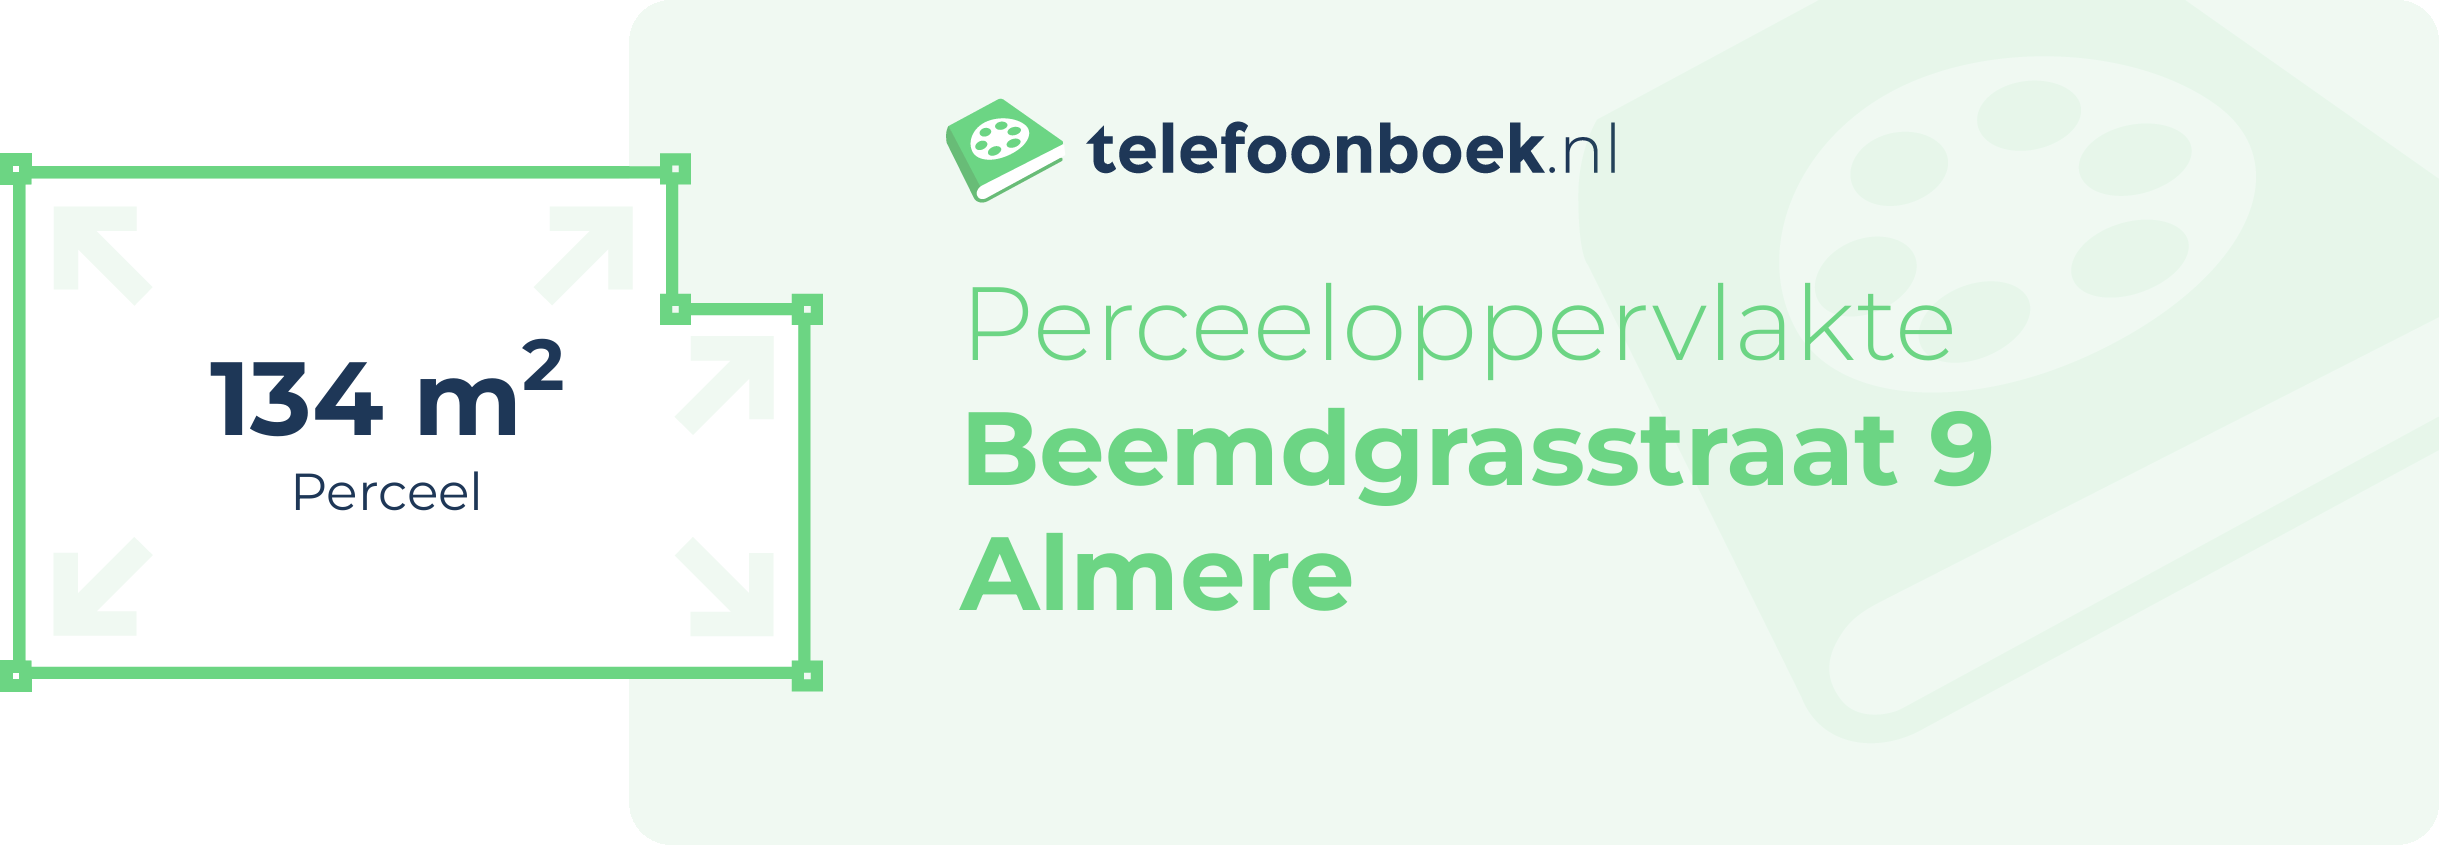 Perceeloppervlakte Beemdgrasstraat 9 Almere